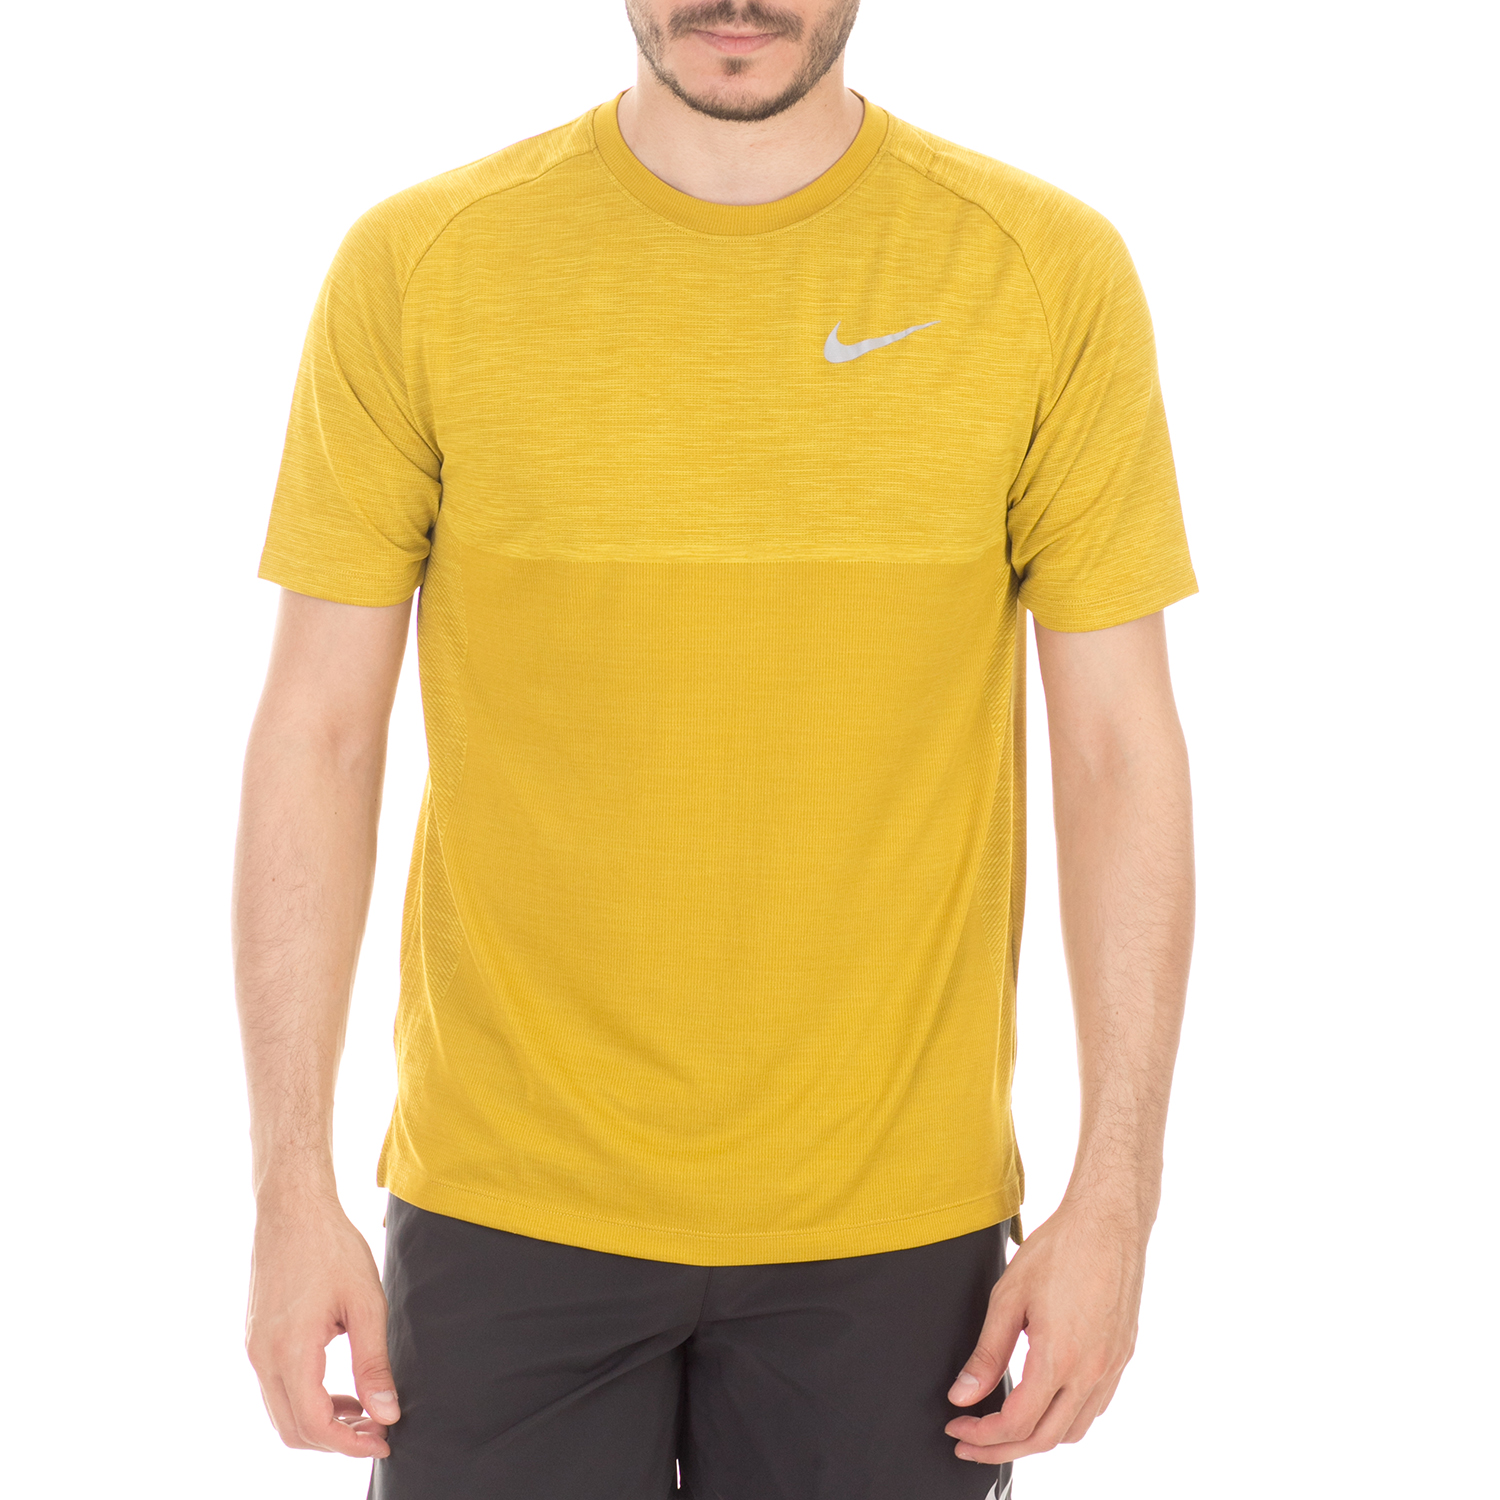 NIKE - Ανδρική κοντομάνικη μπλούζα NIKE DRY MEDALIST TOP κίτρινη Ανδρικά/Ρούχα/Αθλητικά/T-shirt